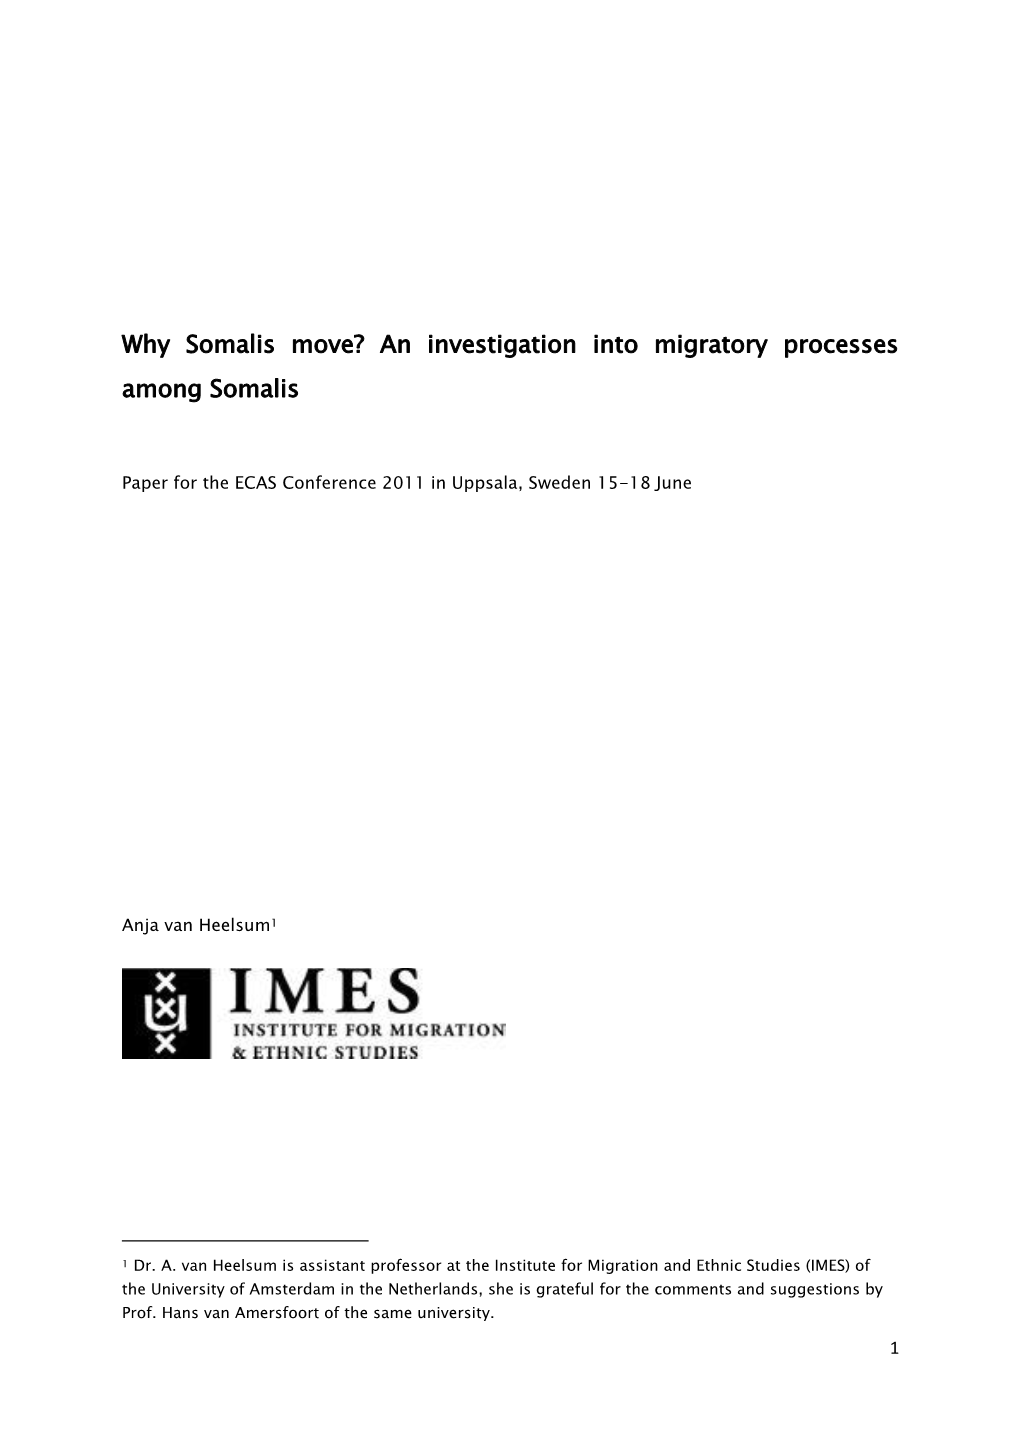 Why Somalis Move? an Investigation Into Migratory Processes Among Somalis